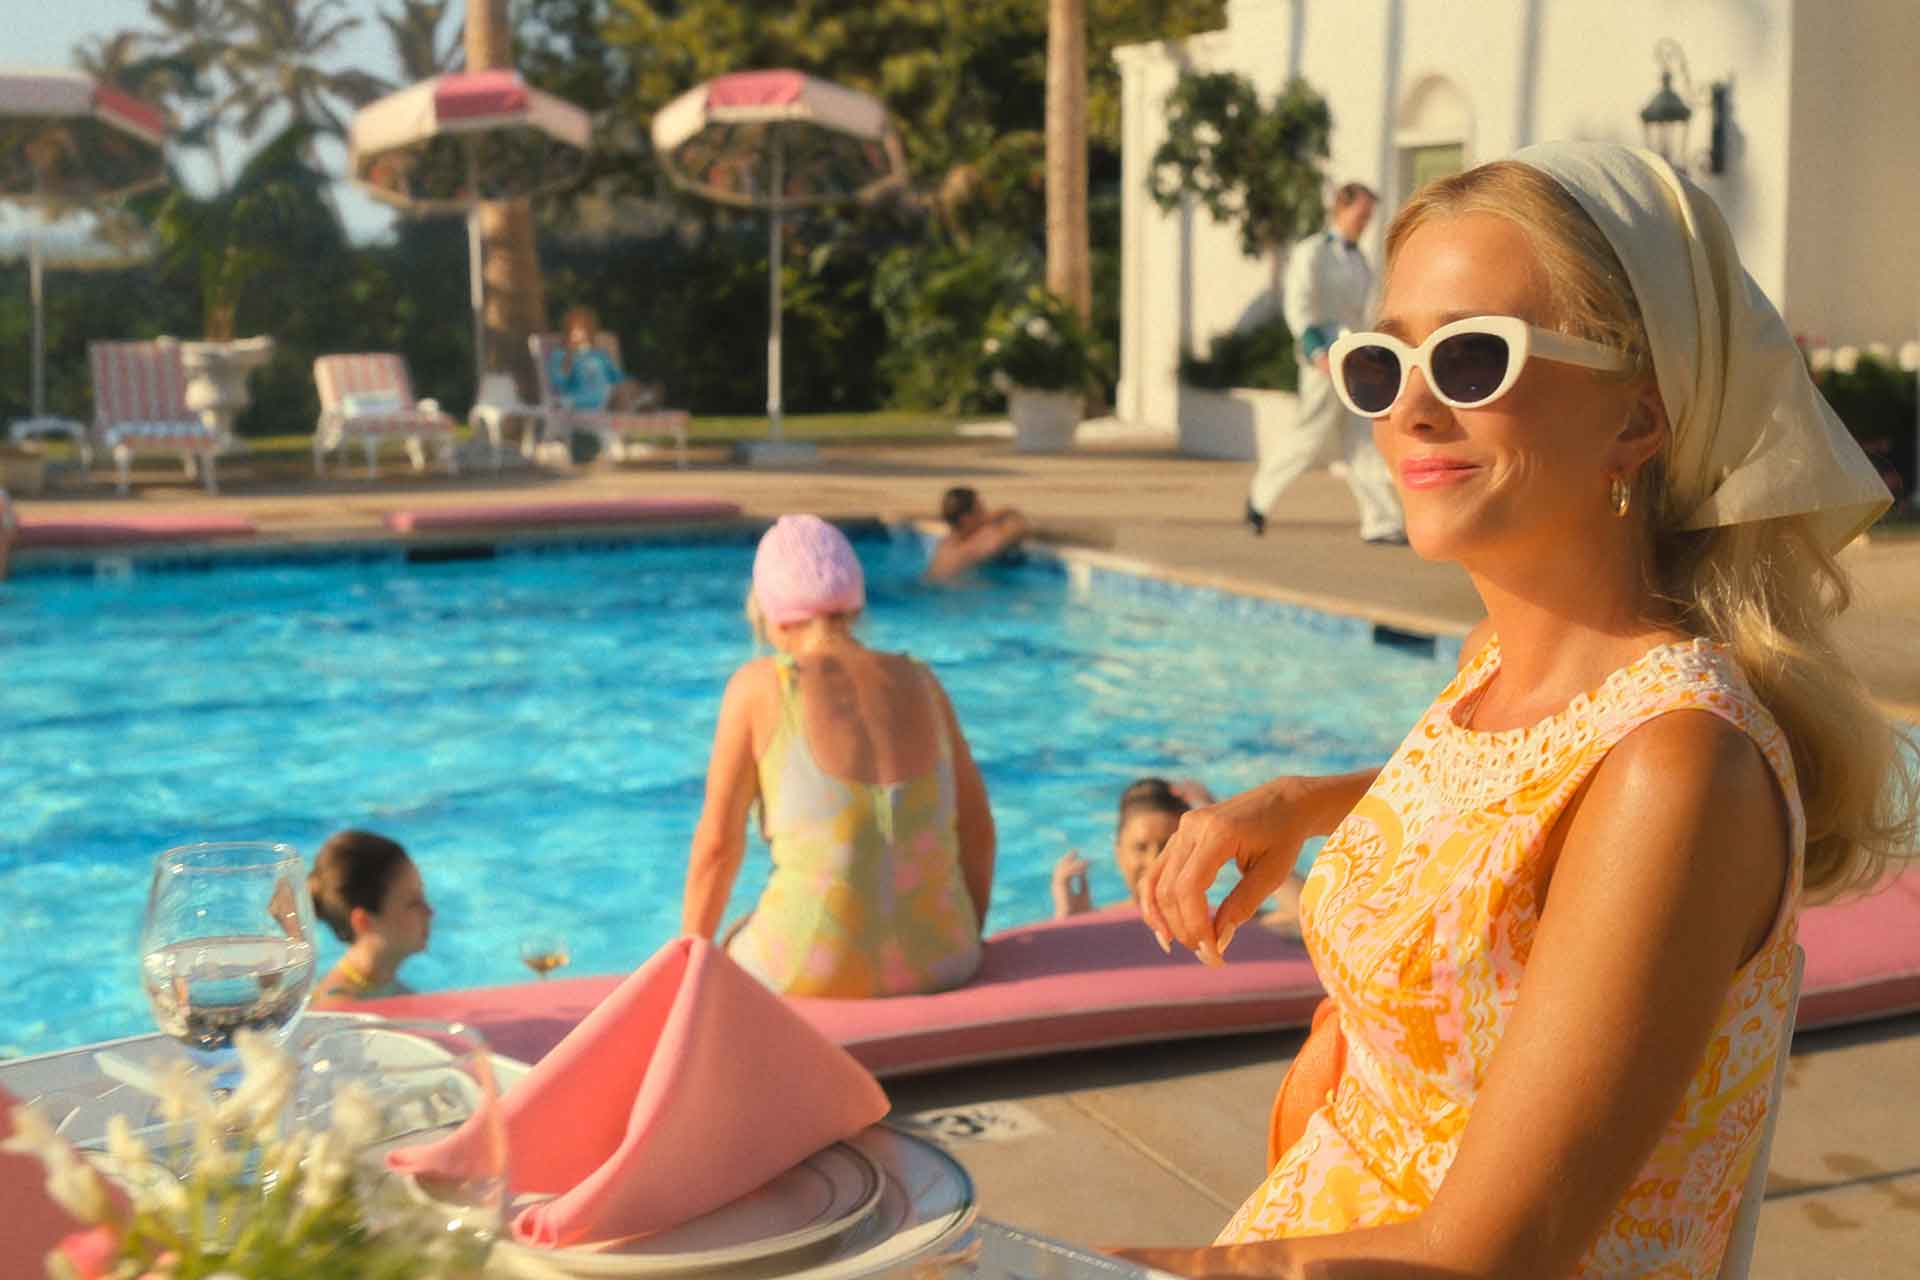 Kristen Wiig sitting beside a swimming pool wearing an orange 1960s dress and headscarf